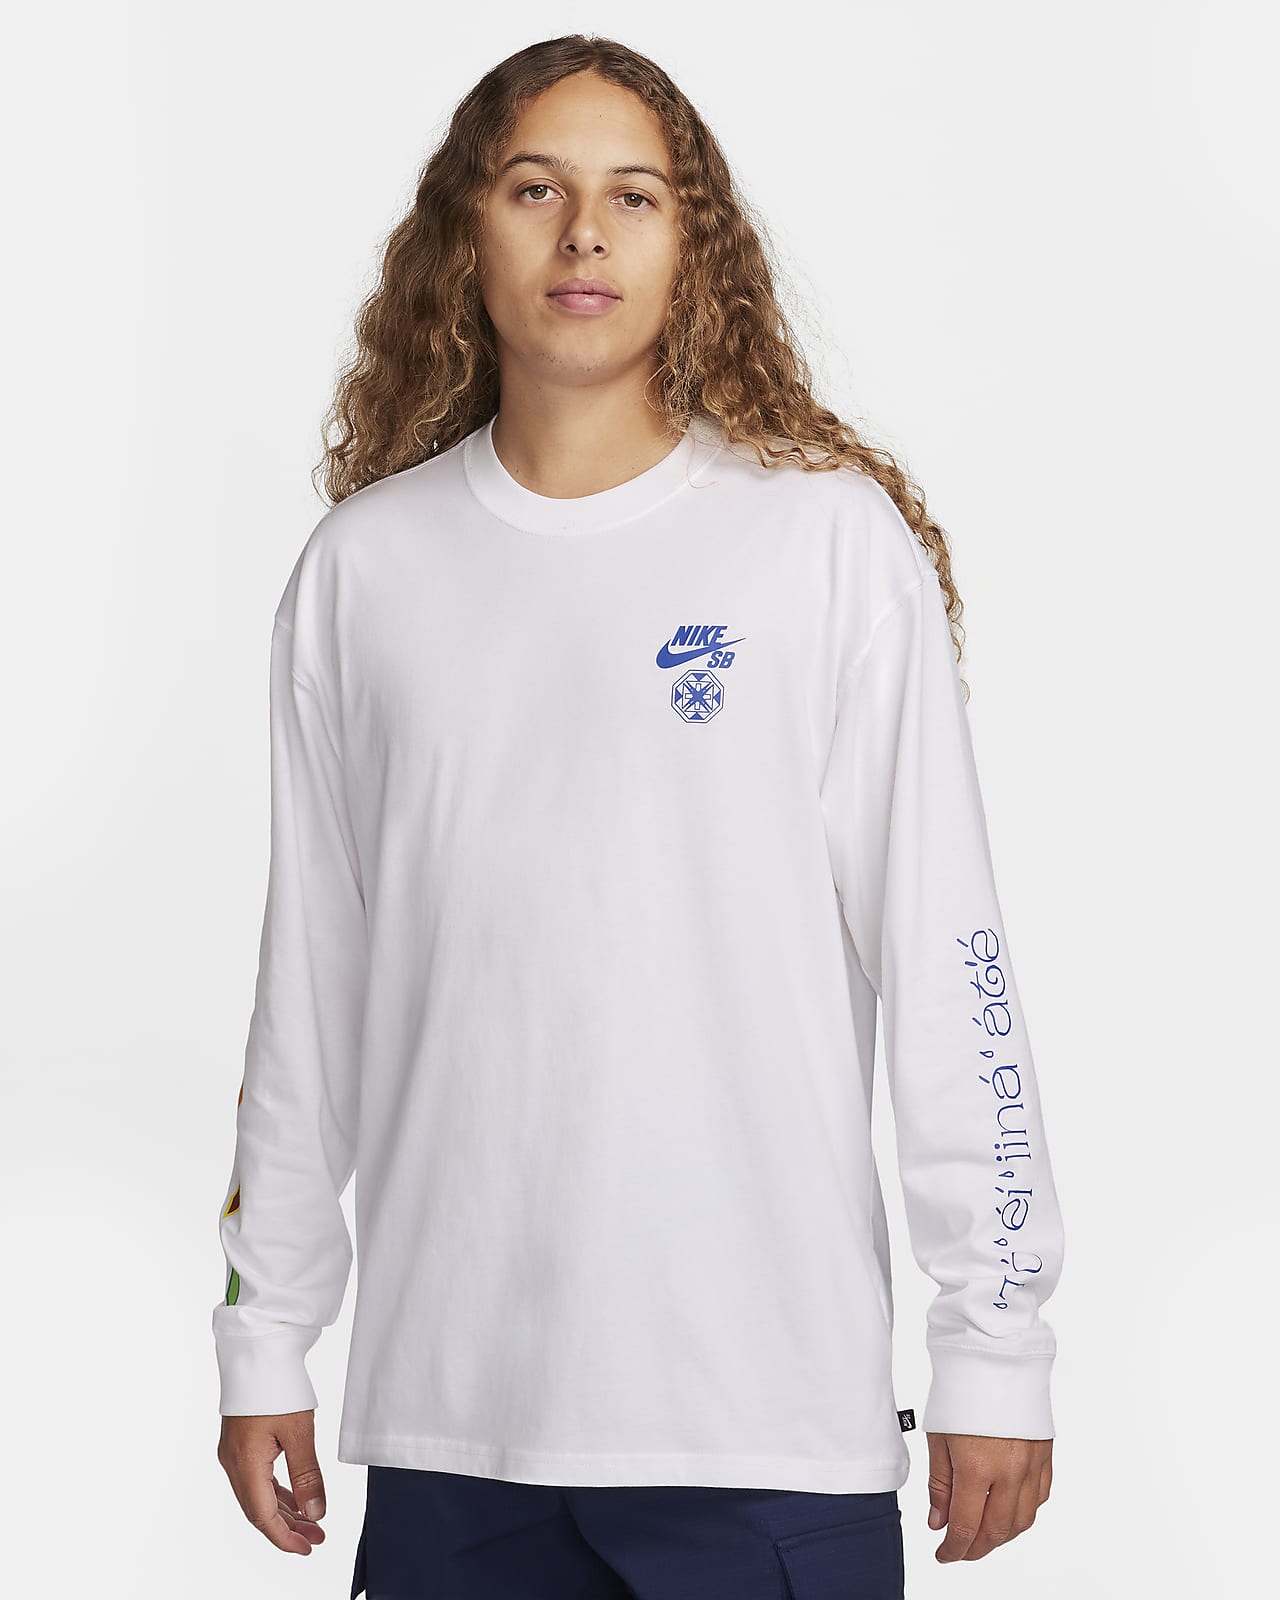 Nike SB x Di'Orr Greenwood Max90 Longsleeve-Skate-T-Shirt